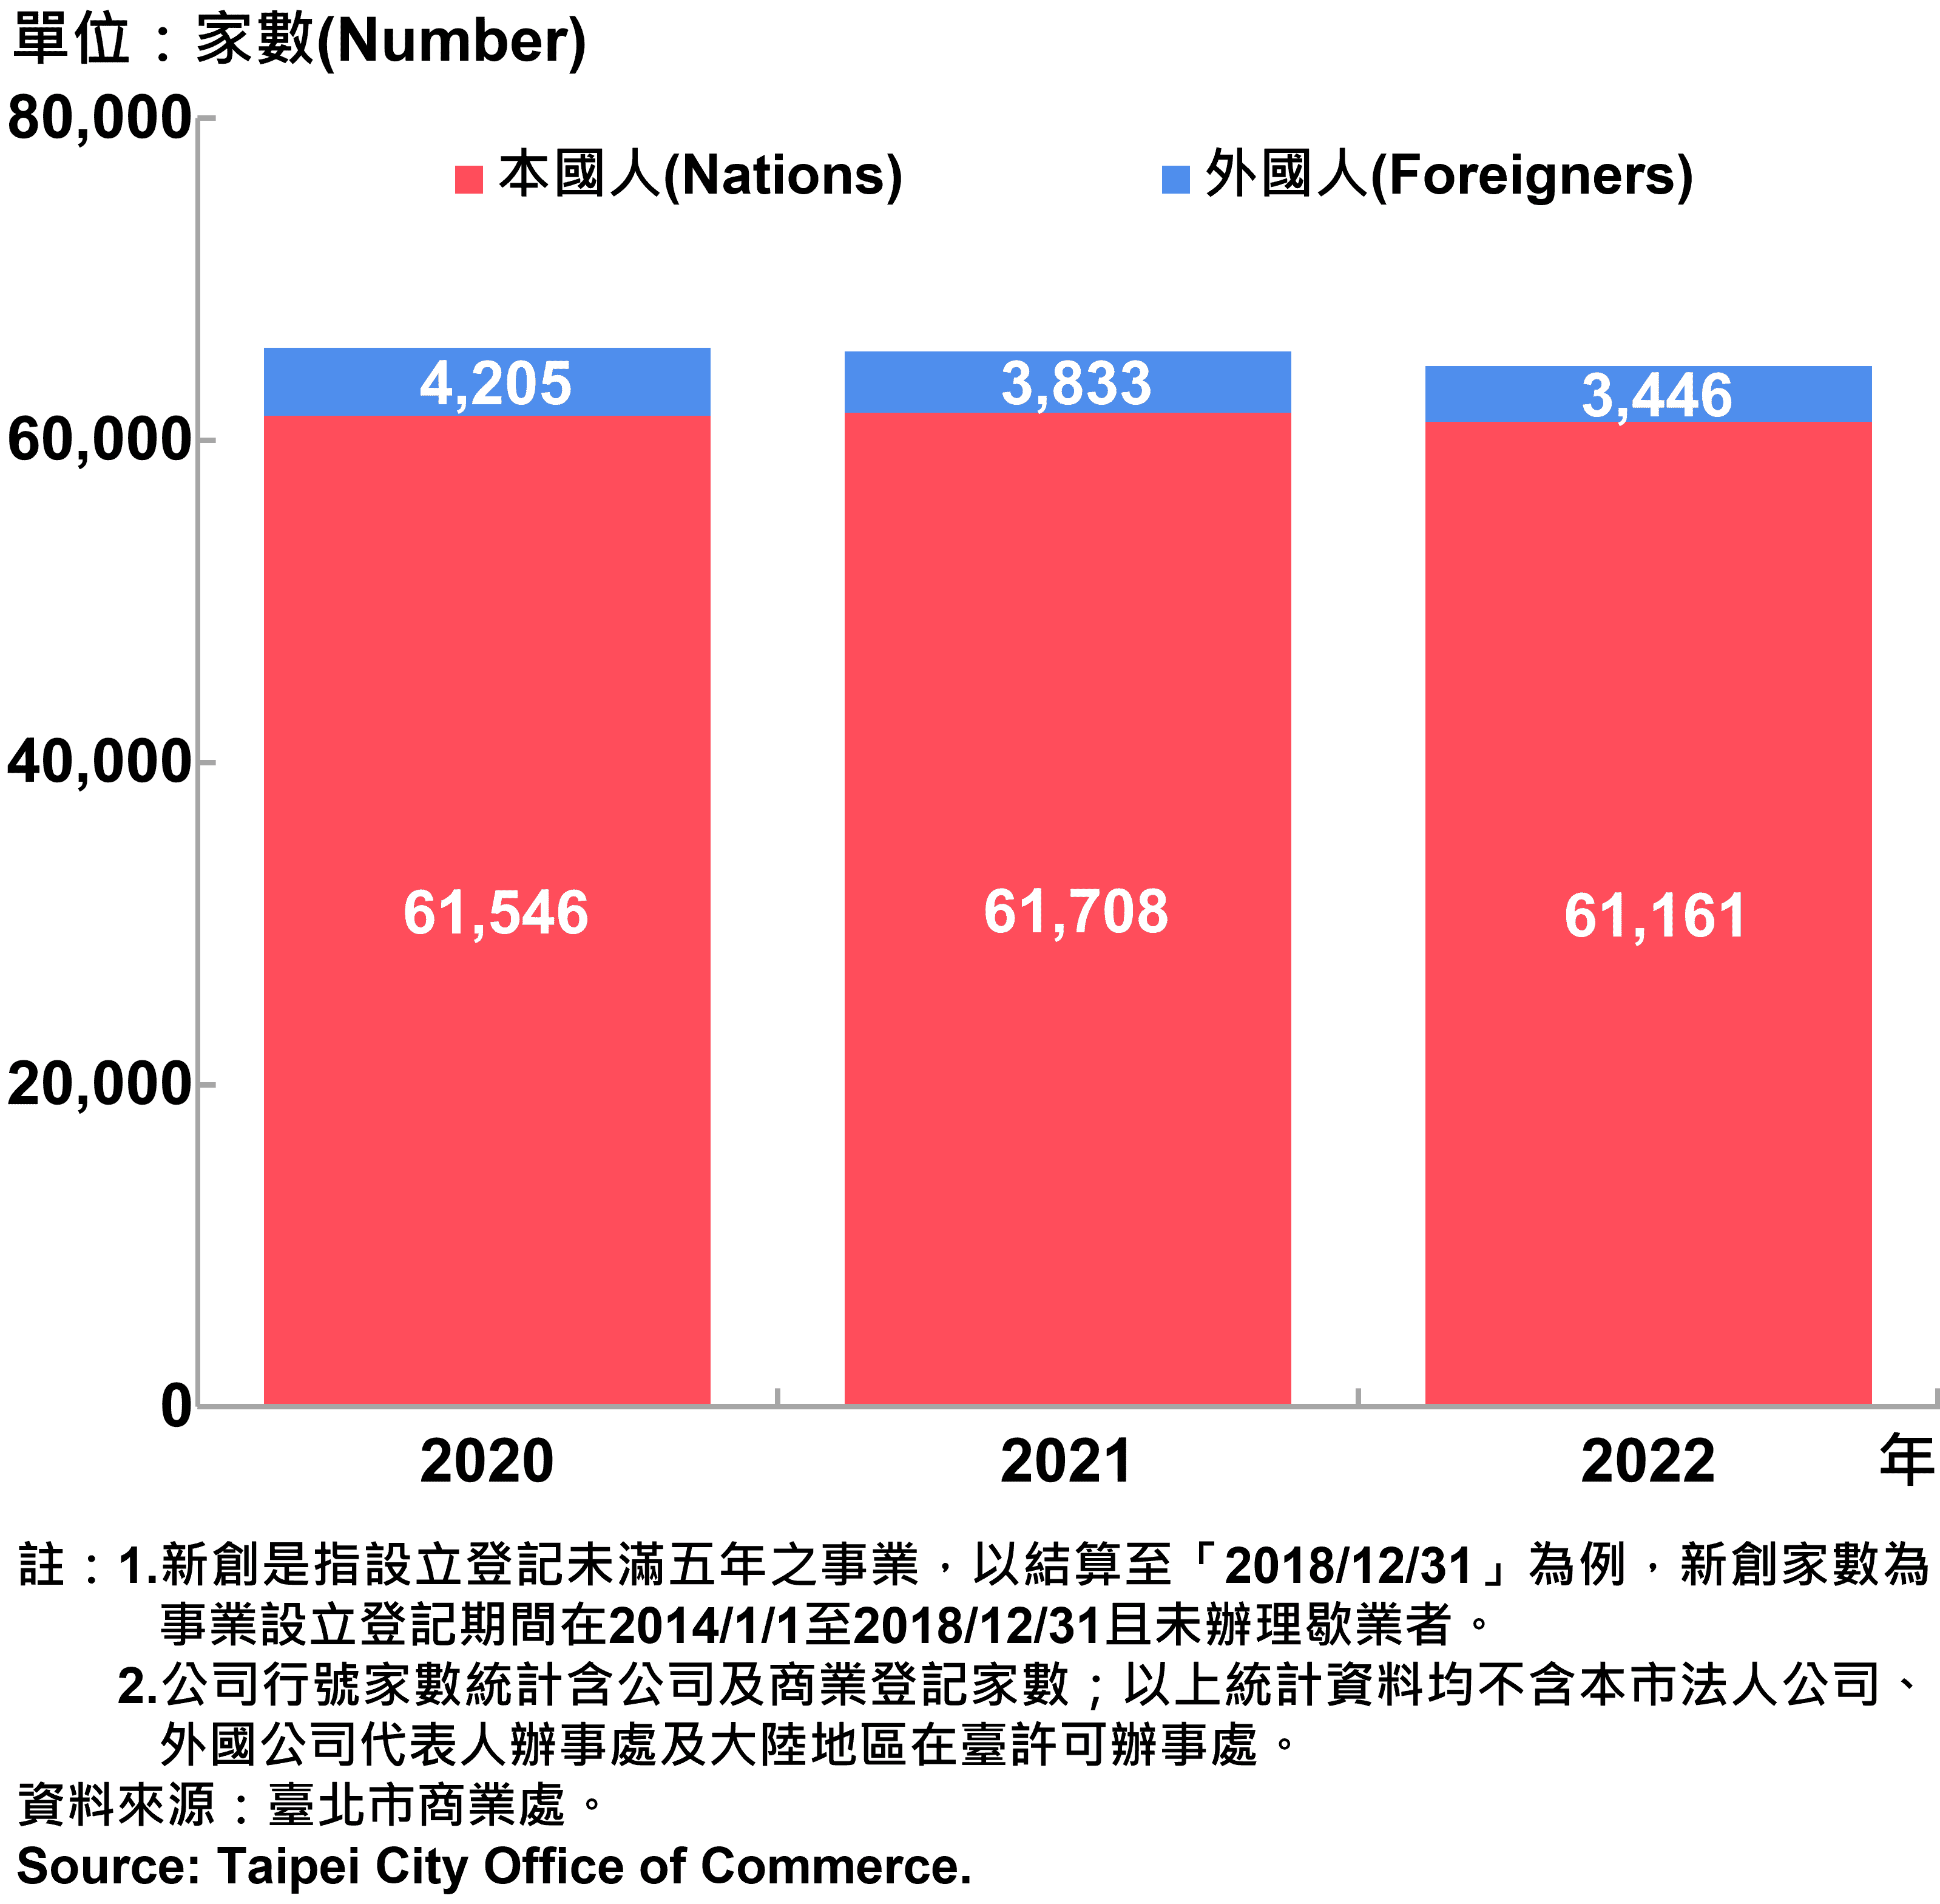 臺北市新創公司行號負責人-本國人與外國人分布情形-現存家數—2022 Responsible Person of Newly Registered Companies In Taipei City by Nationality - Number of Current—2022